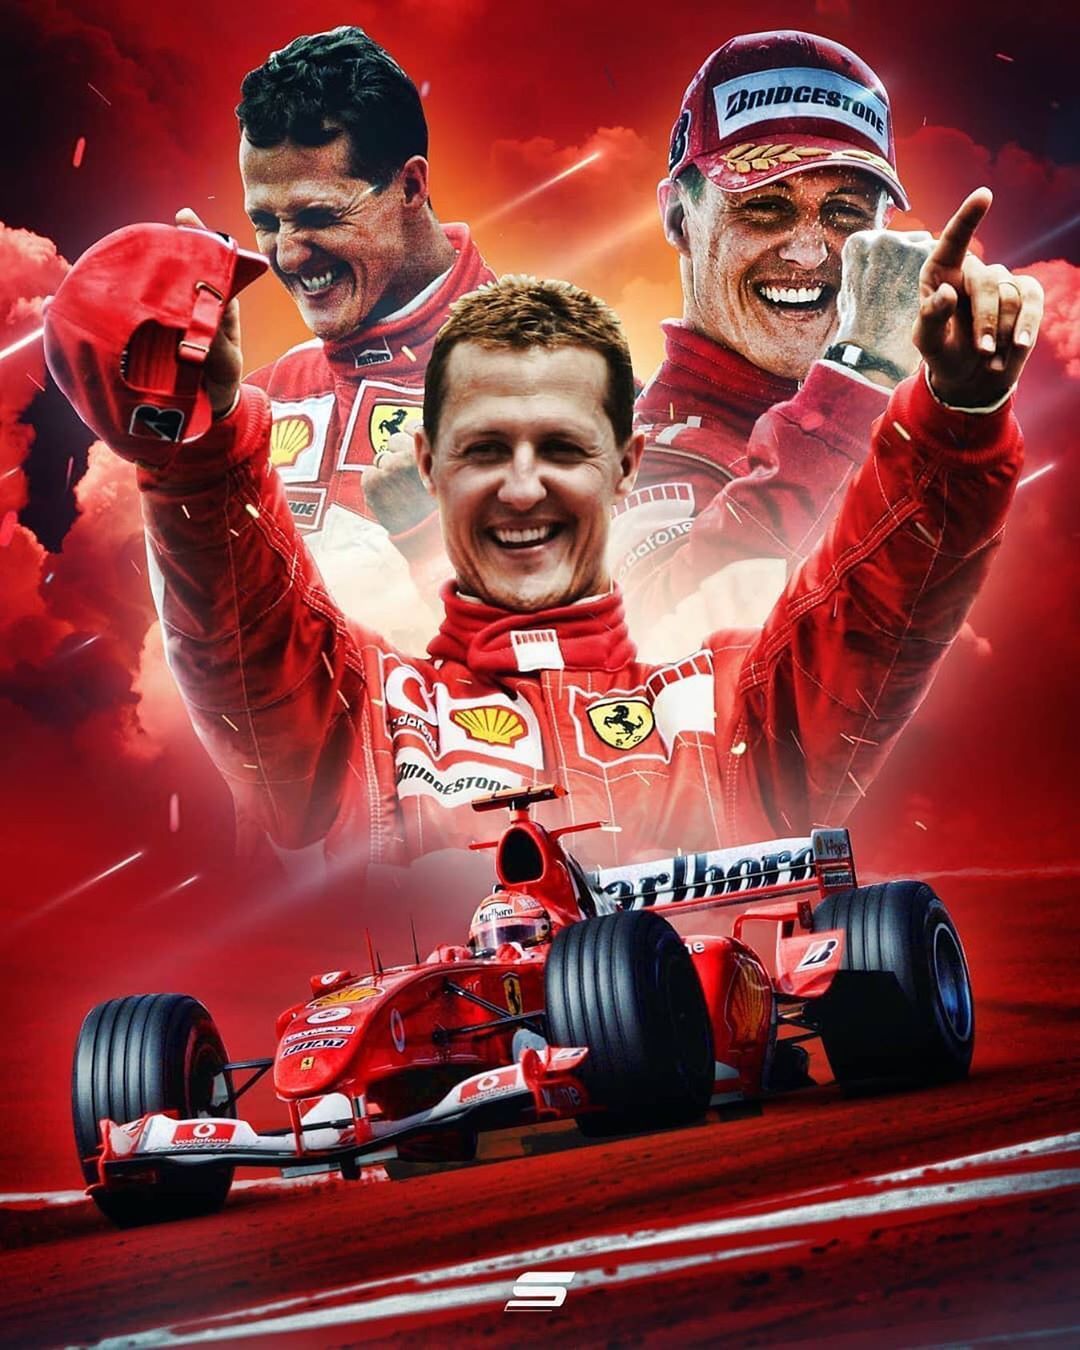 Michael Schumacher Wallpapers  Top 30 Best Michael Schumacher Wallpapers   HQ 